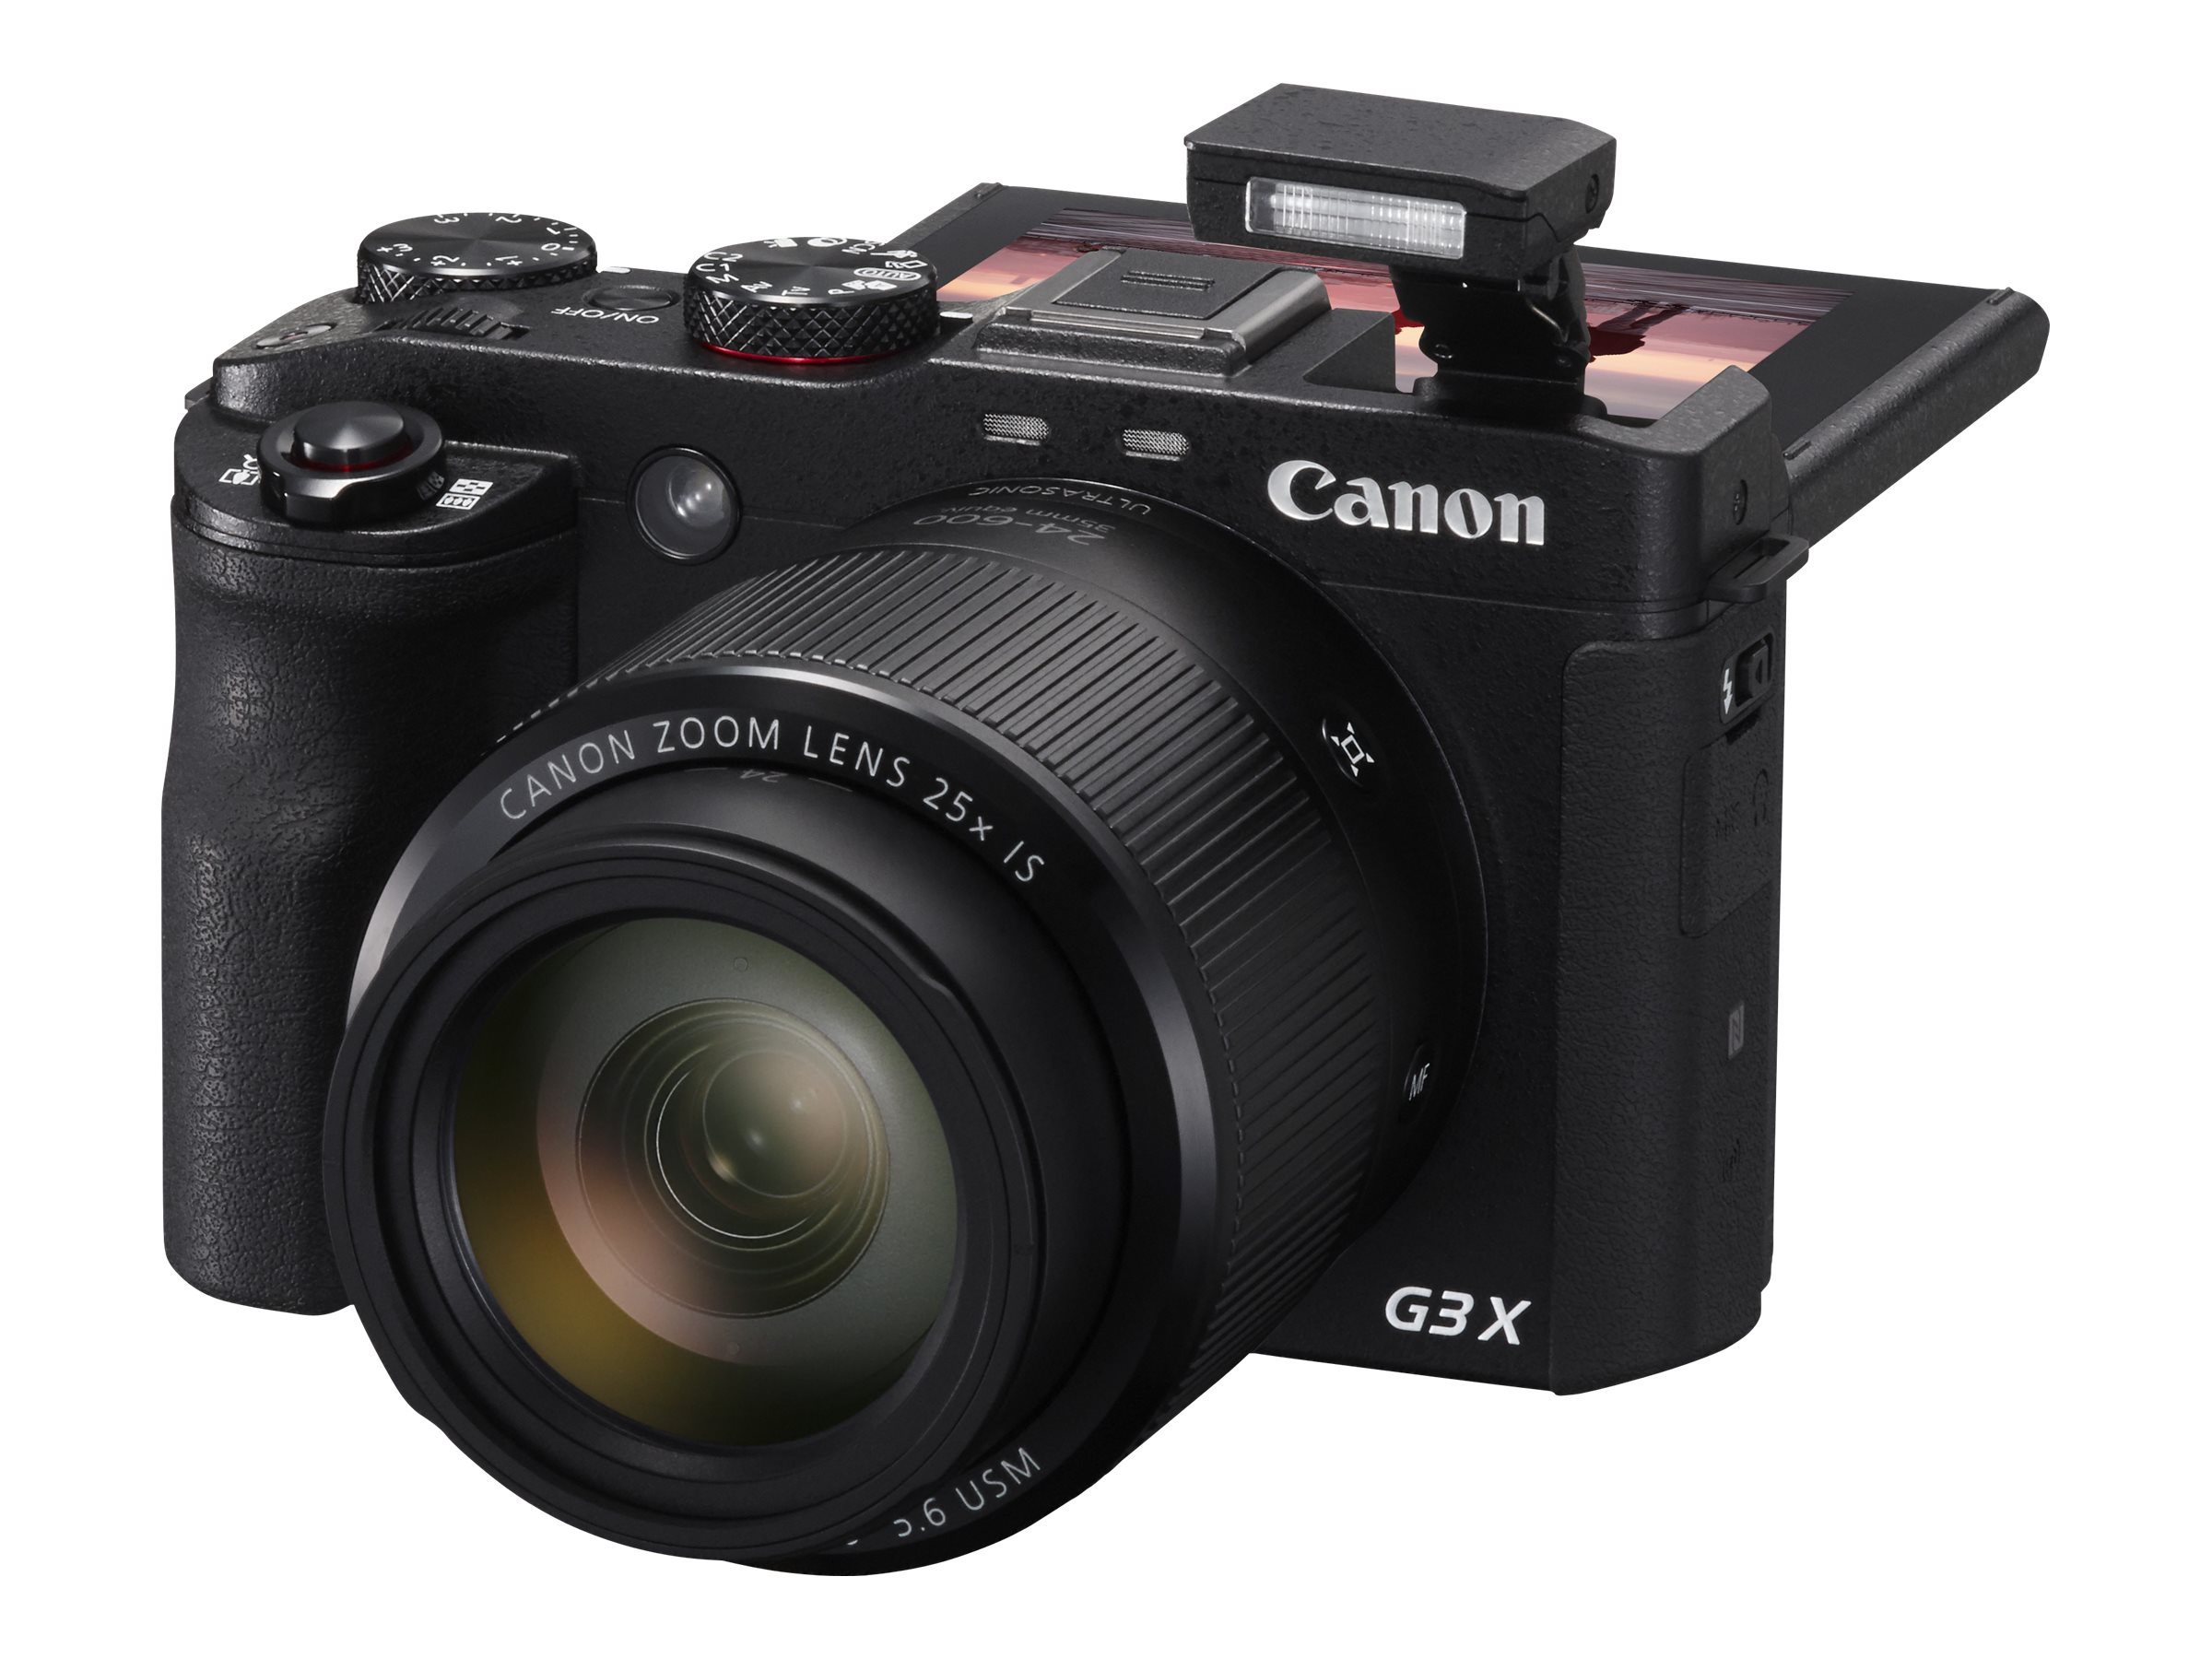 Canon PowerShot G3 X - Digital camera - compact - 20.2 MP - 1080p - 25x optical zoom - Wi-Fi, NFC - image 1 of 15